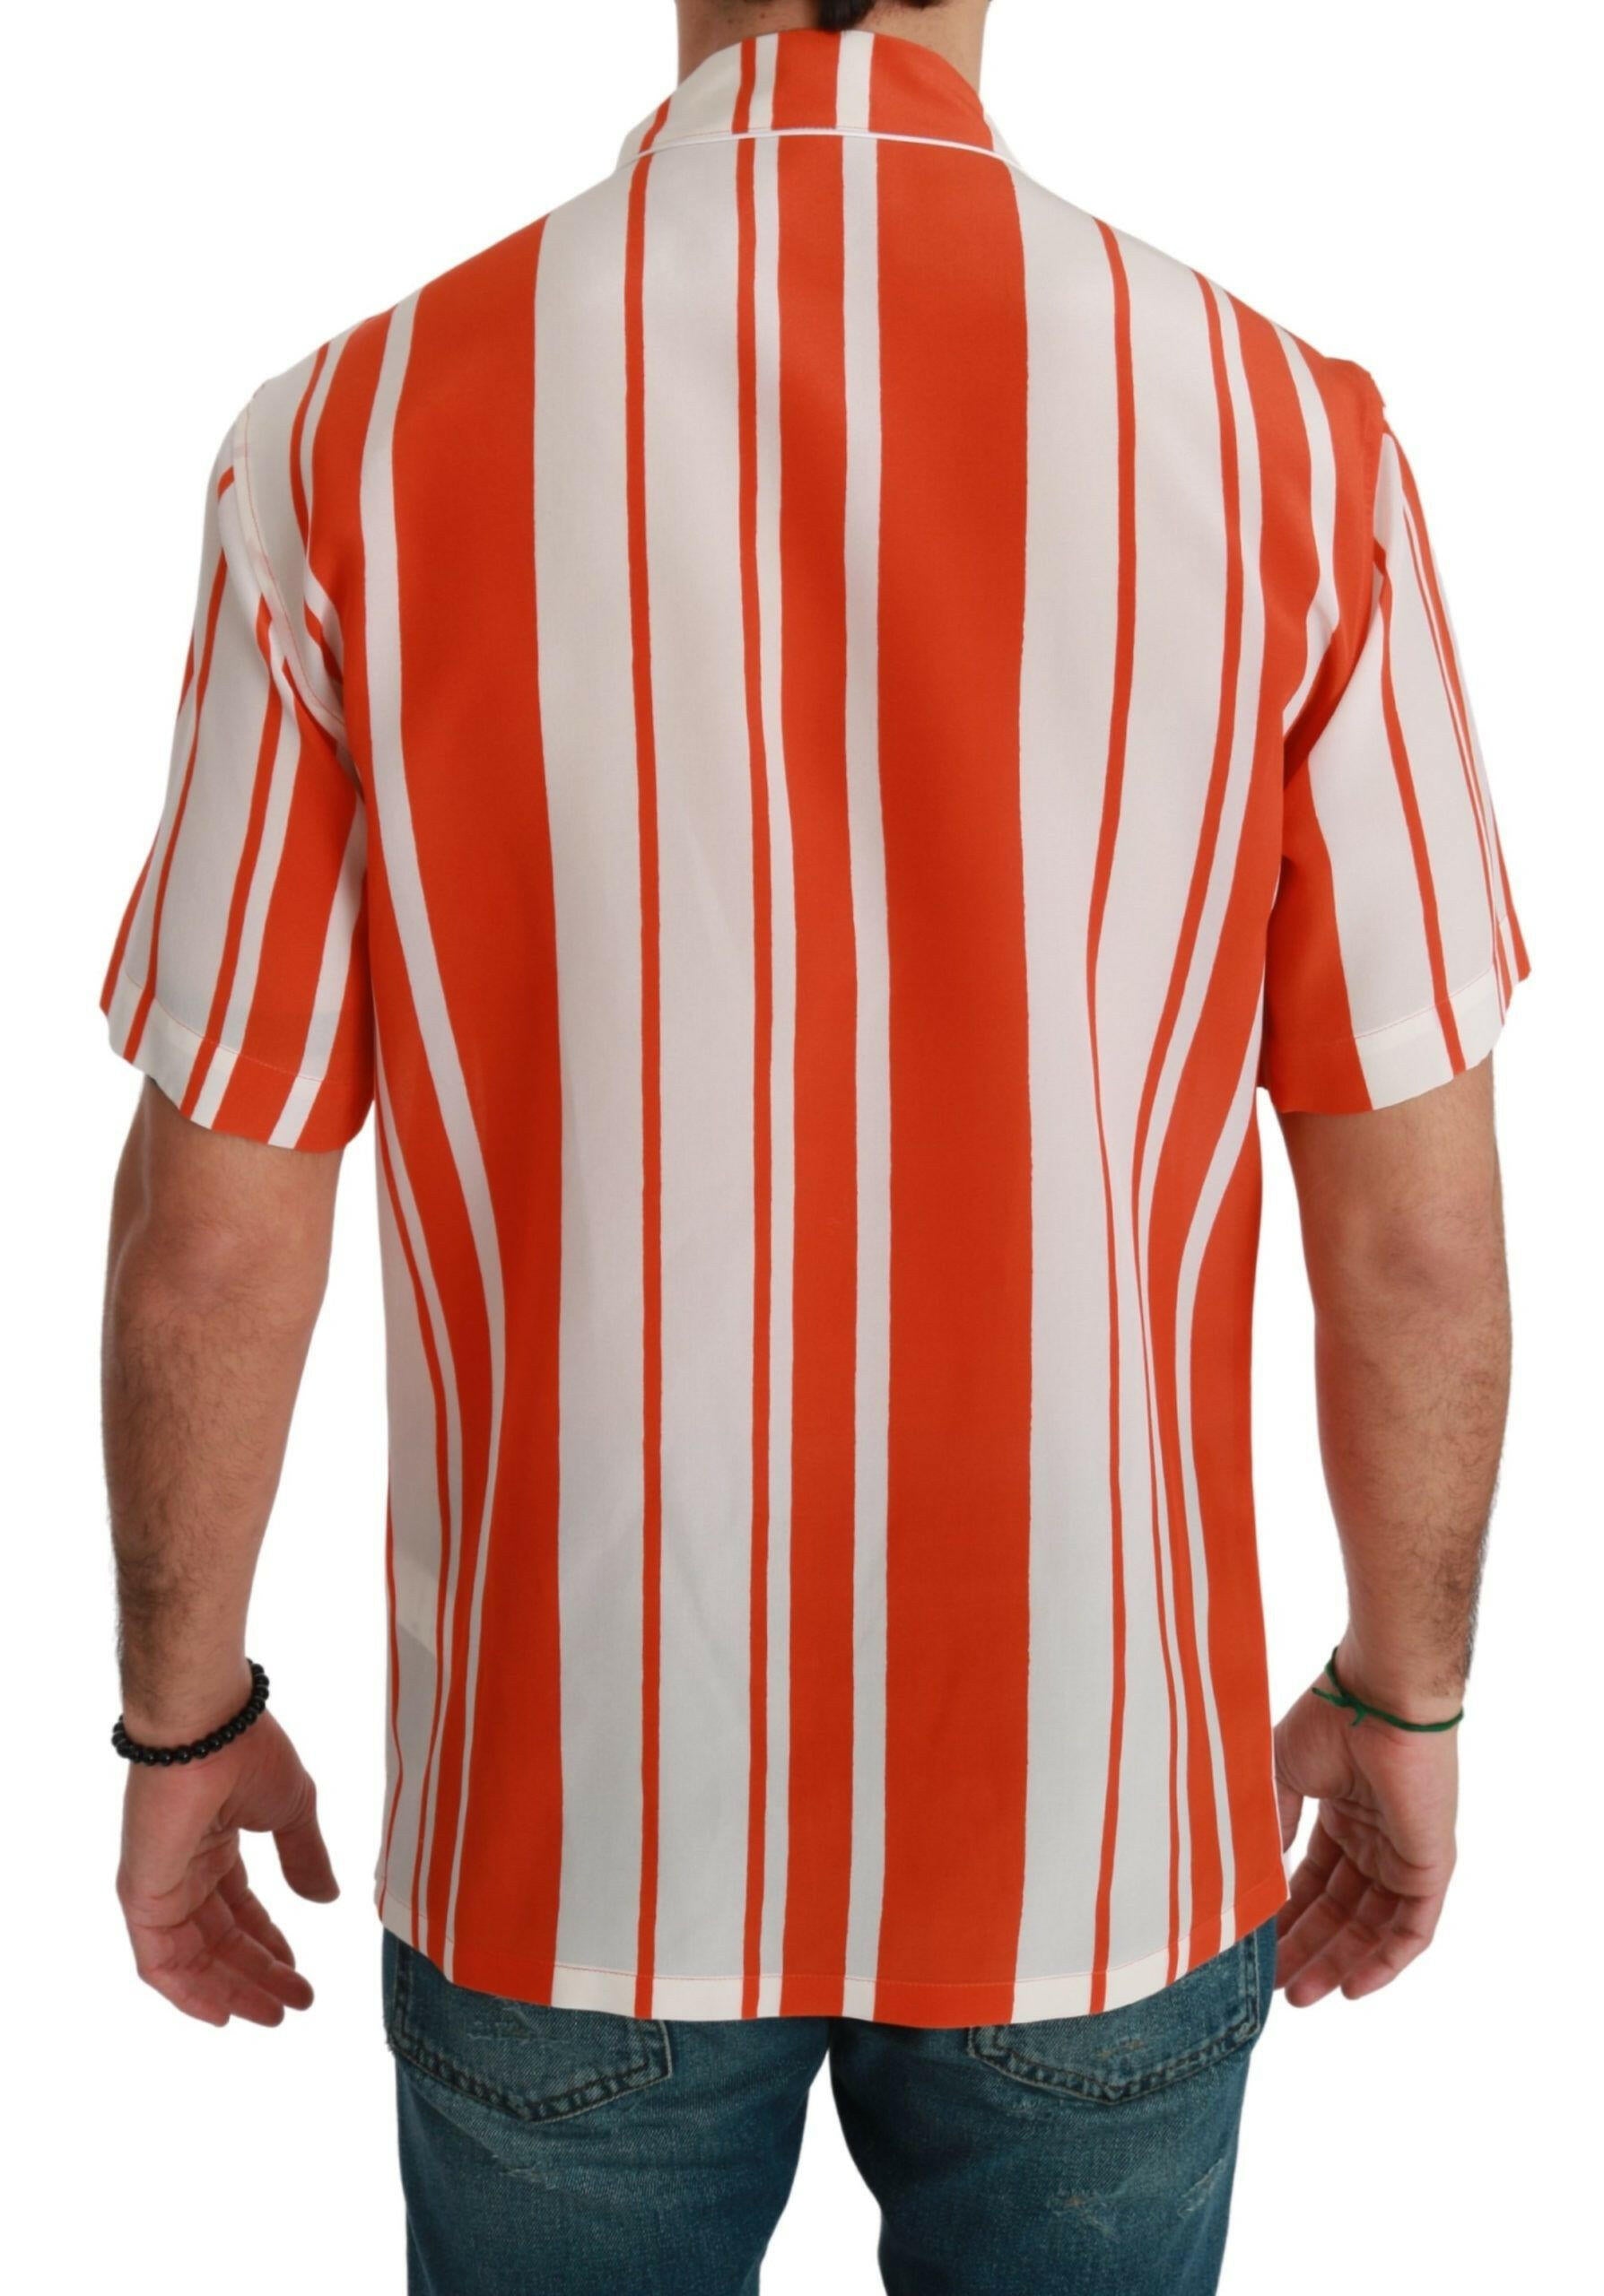 Dolce & Gabbana Orange Silk Striped Short Sleeve White Shirt - GENUINE AUTHENTIC BRAND LLC  